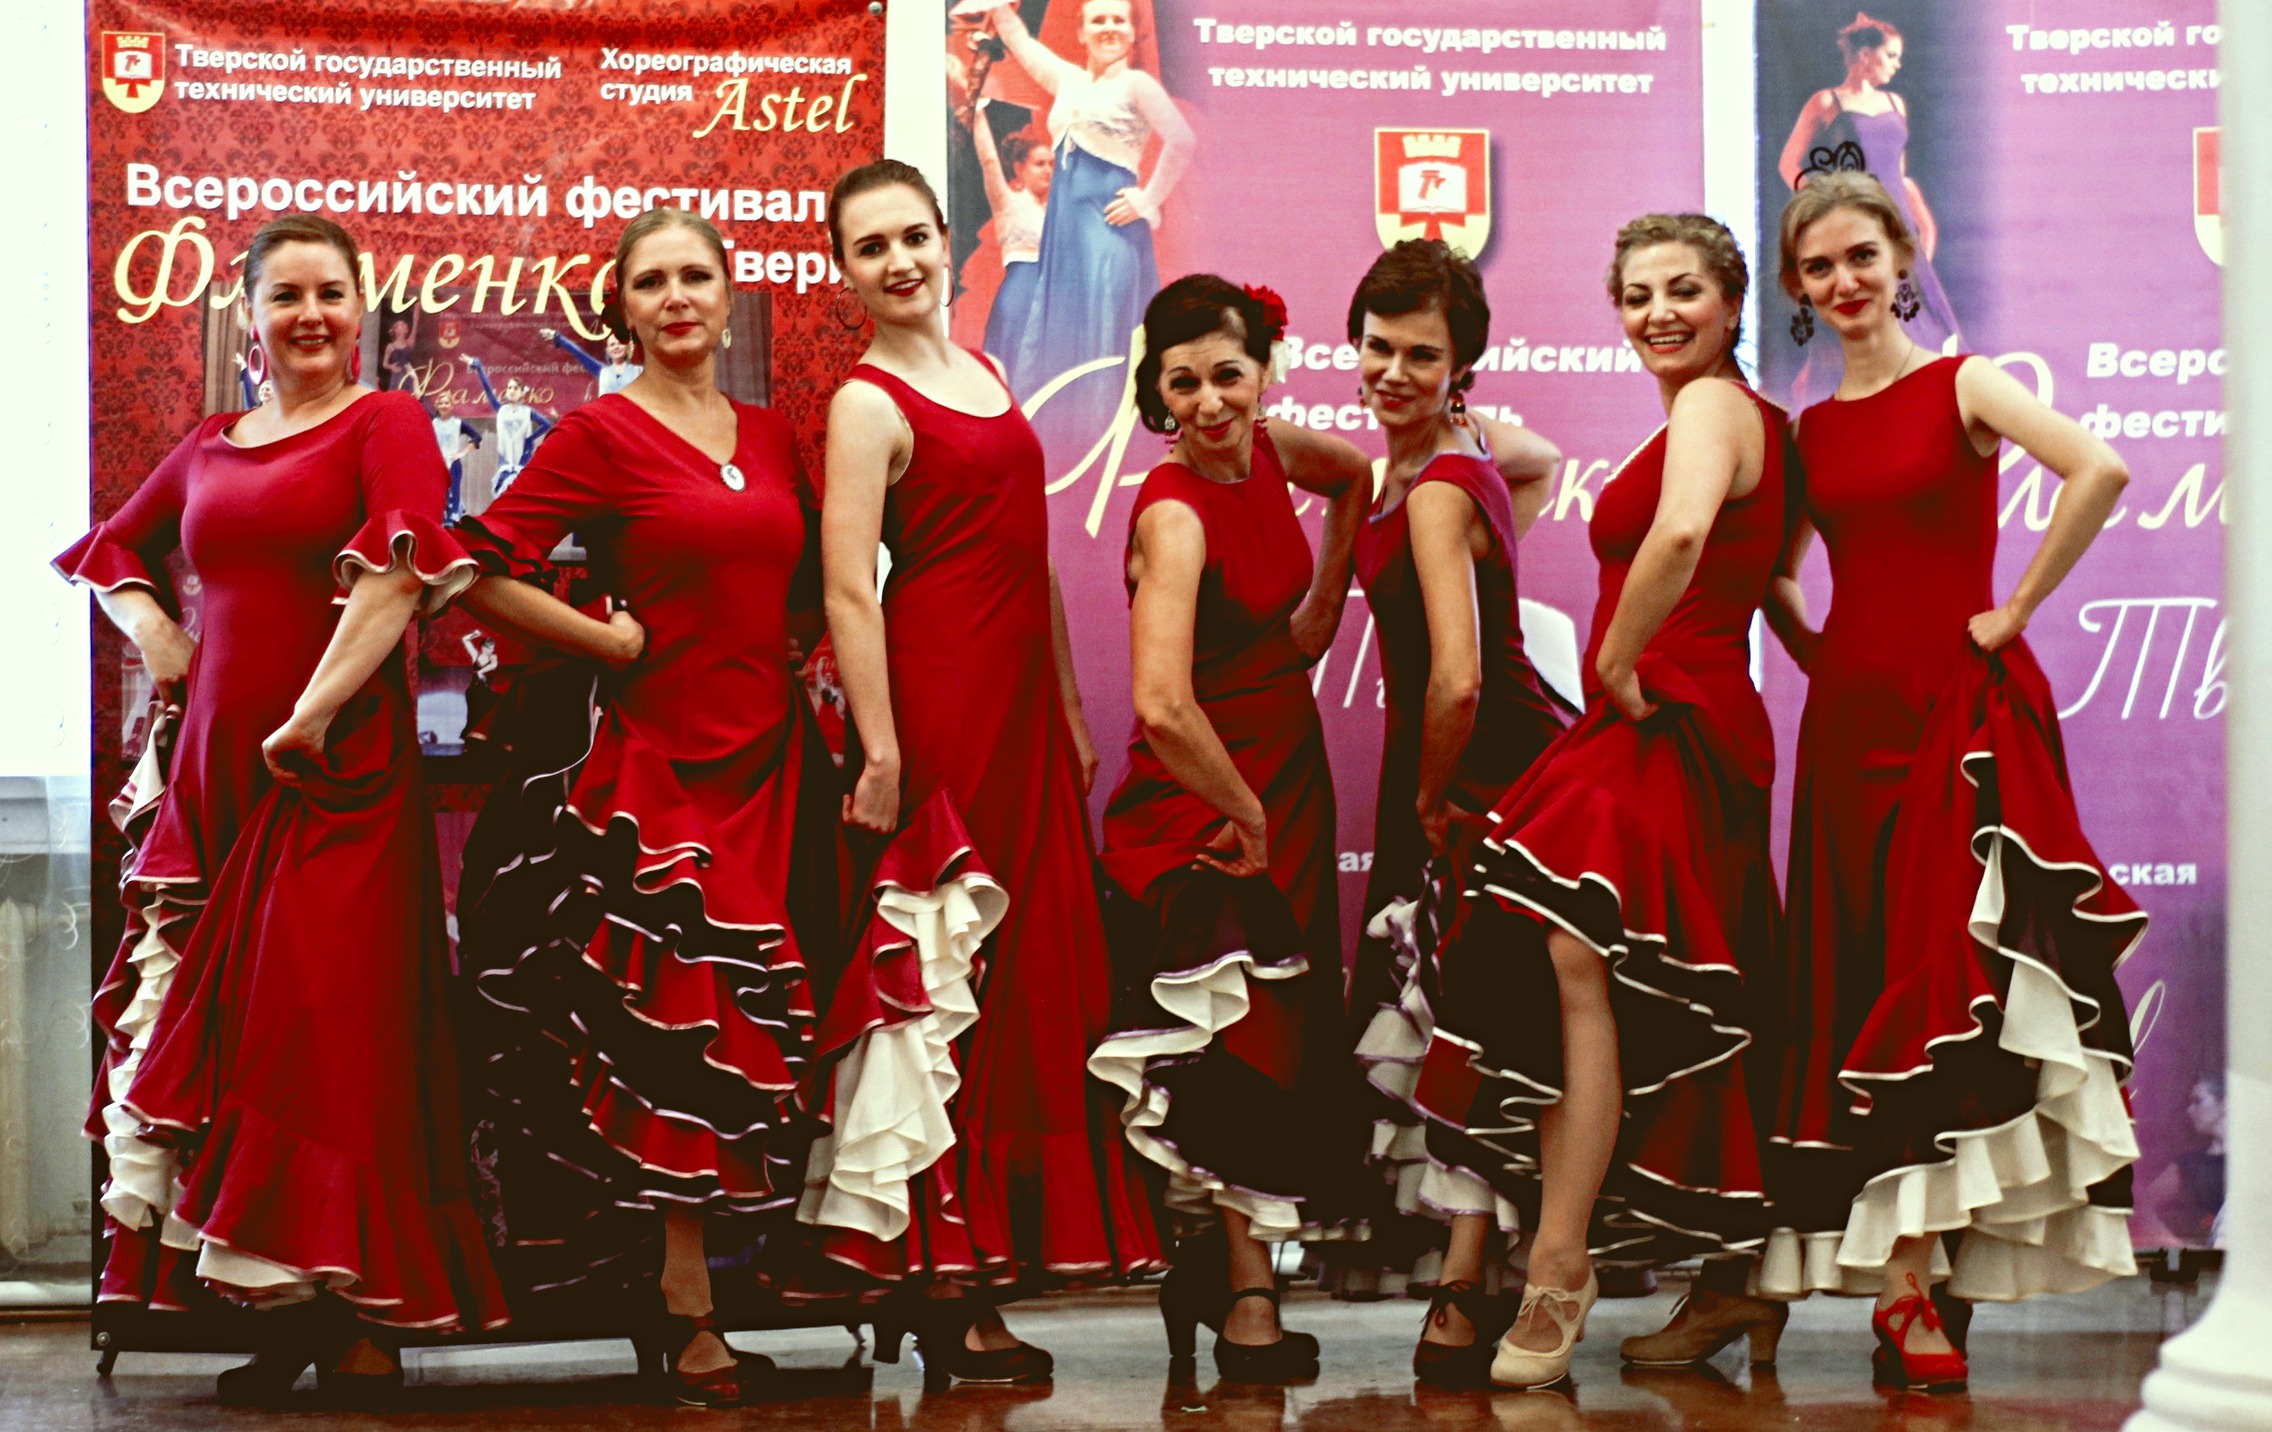 Фестиваль фламенко в Твери